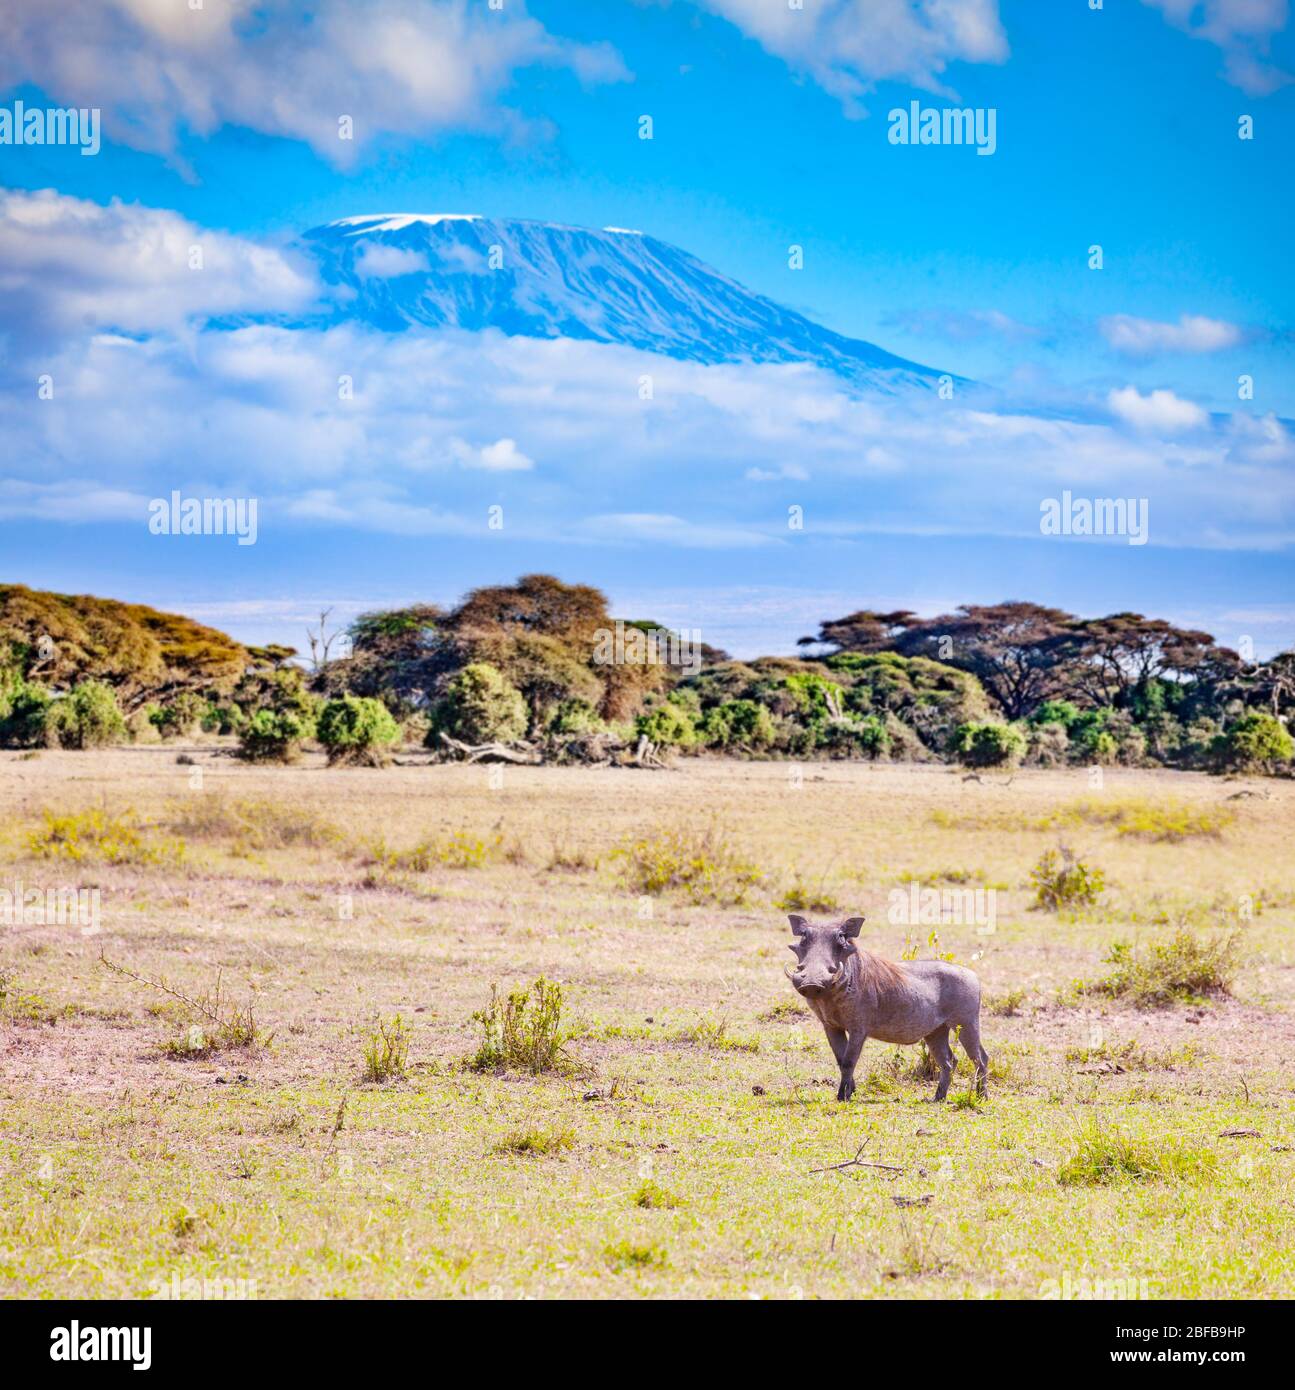 Phacochoerus known as warthogs pig family animal over Kilimanjaro mountain in Kenya savanna, Africa Stock Photo